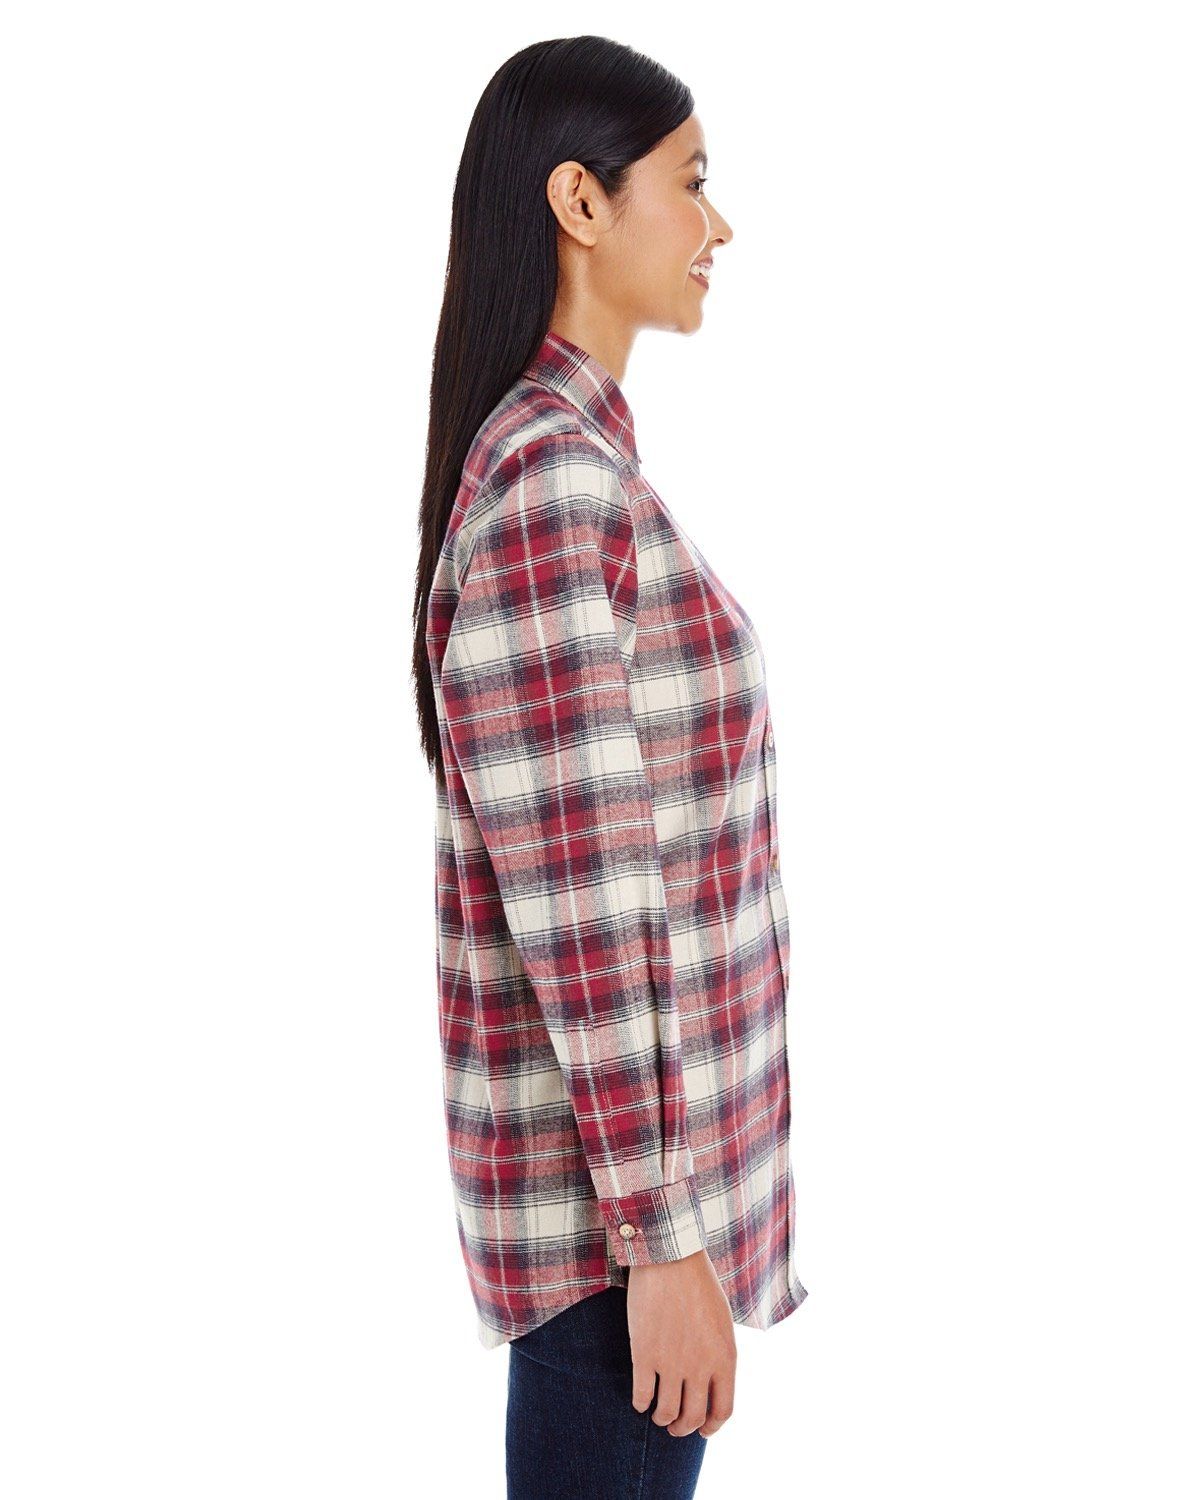 'Backpacker BP7030 Ladies Yarn-Dyed Flannel Shirt'